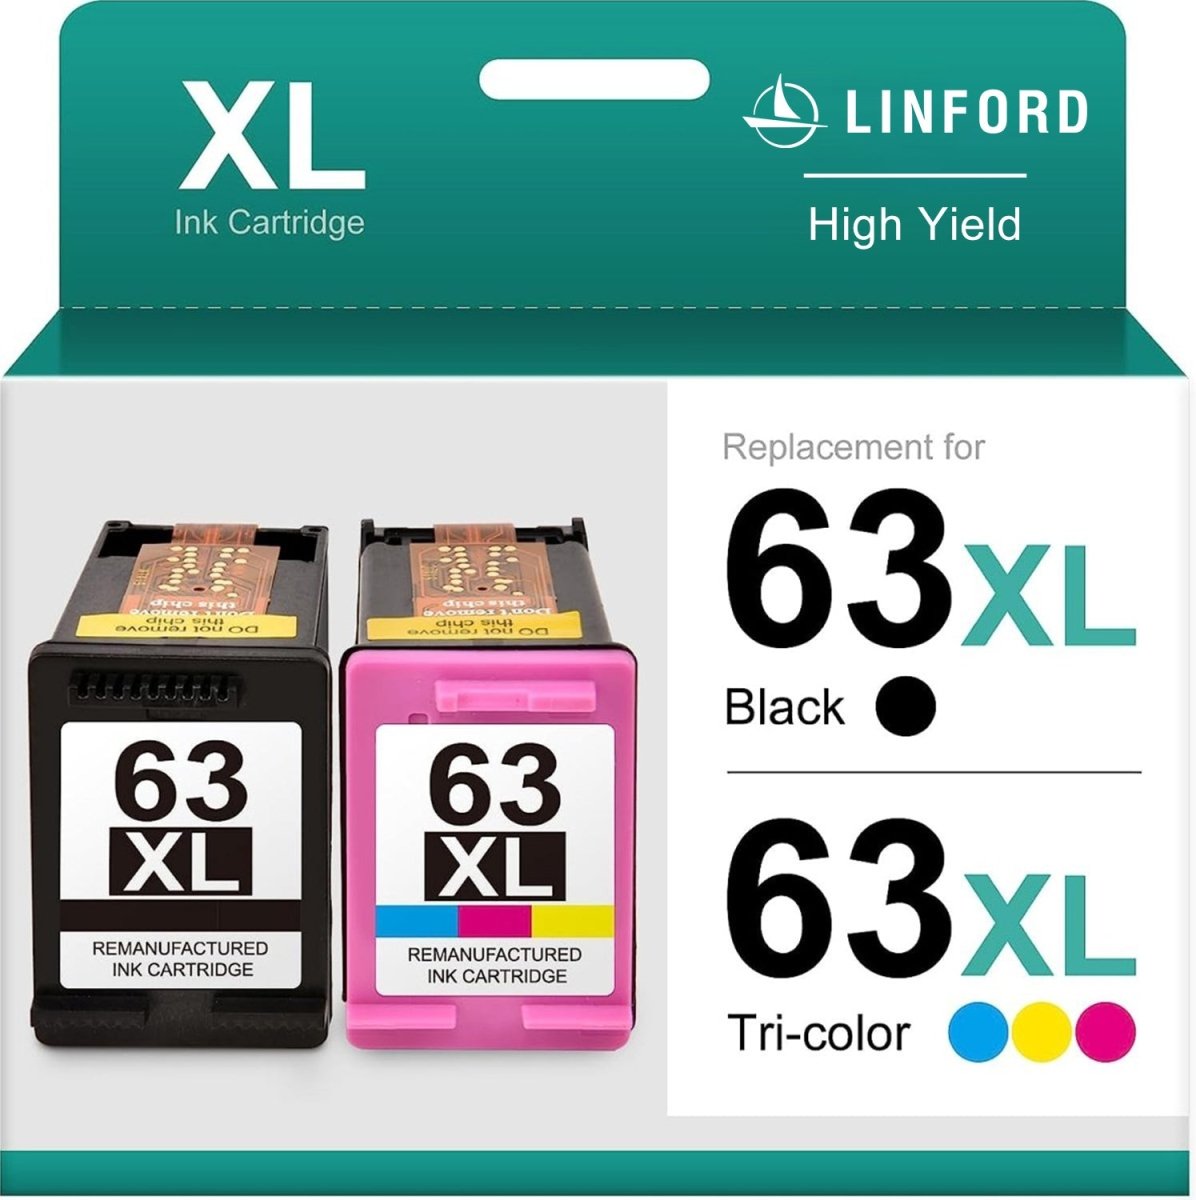 HP 63XL Ink Cartridge Combo Pack Remanufactured (Black, Tri-Color, 2 Pack) - Linford Office:Printer Ink & Toner Cartridge